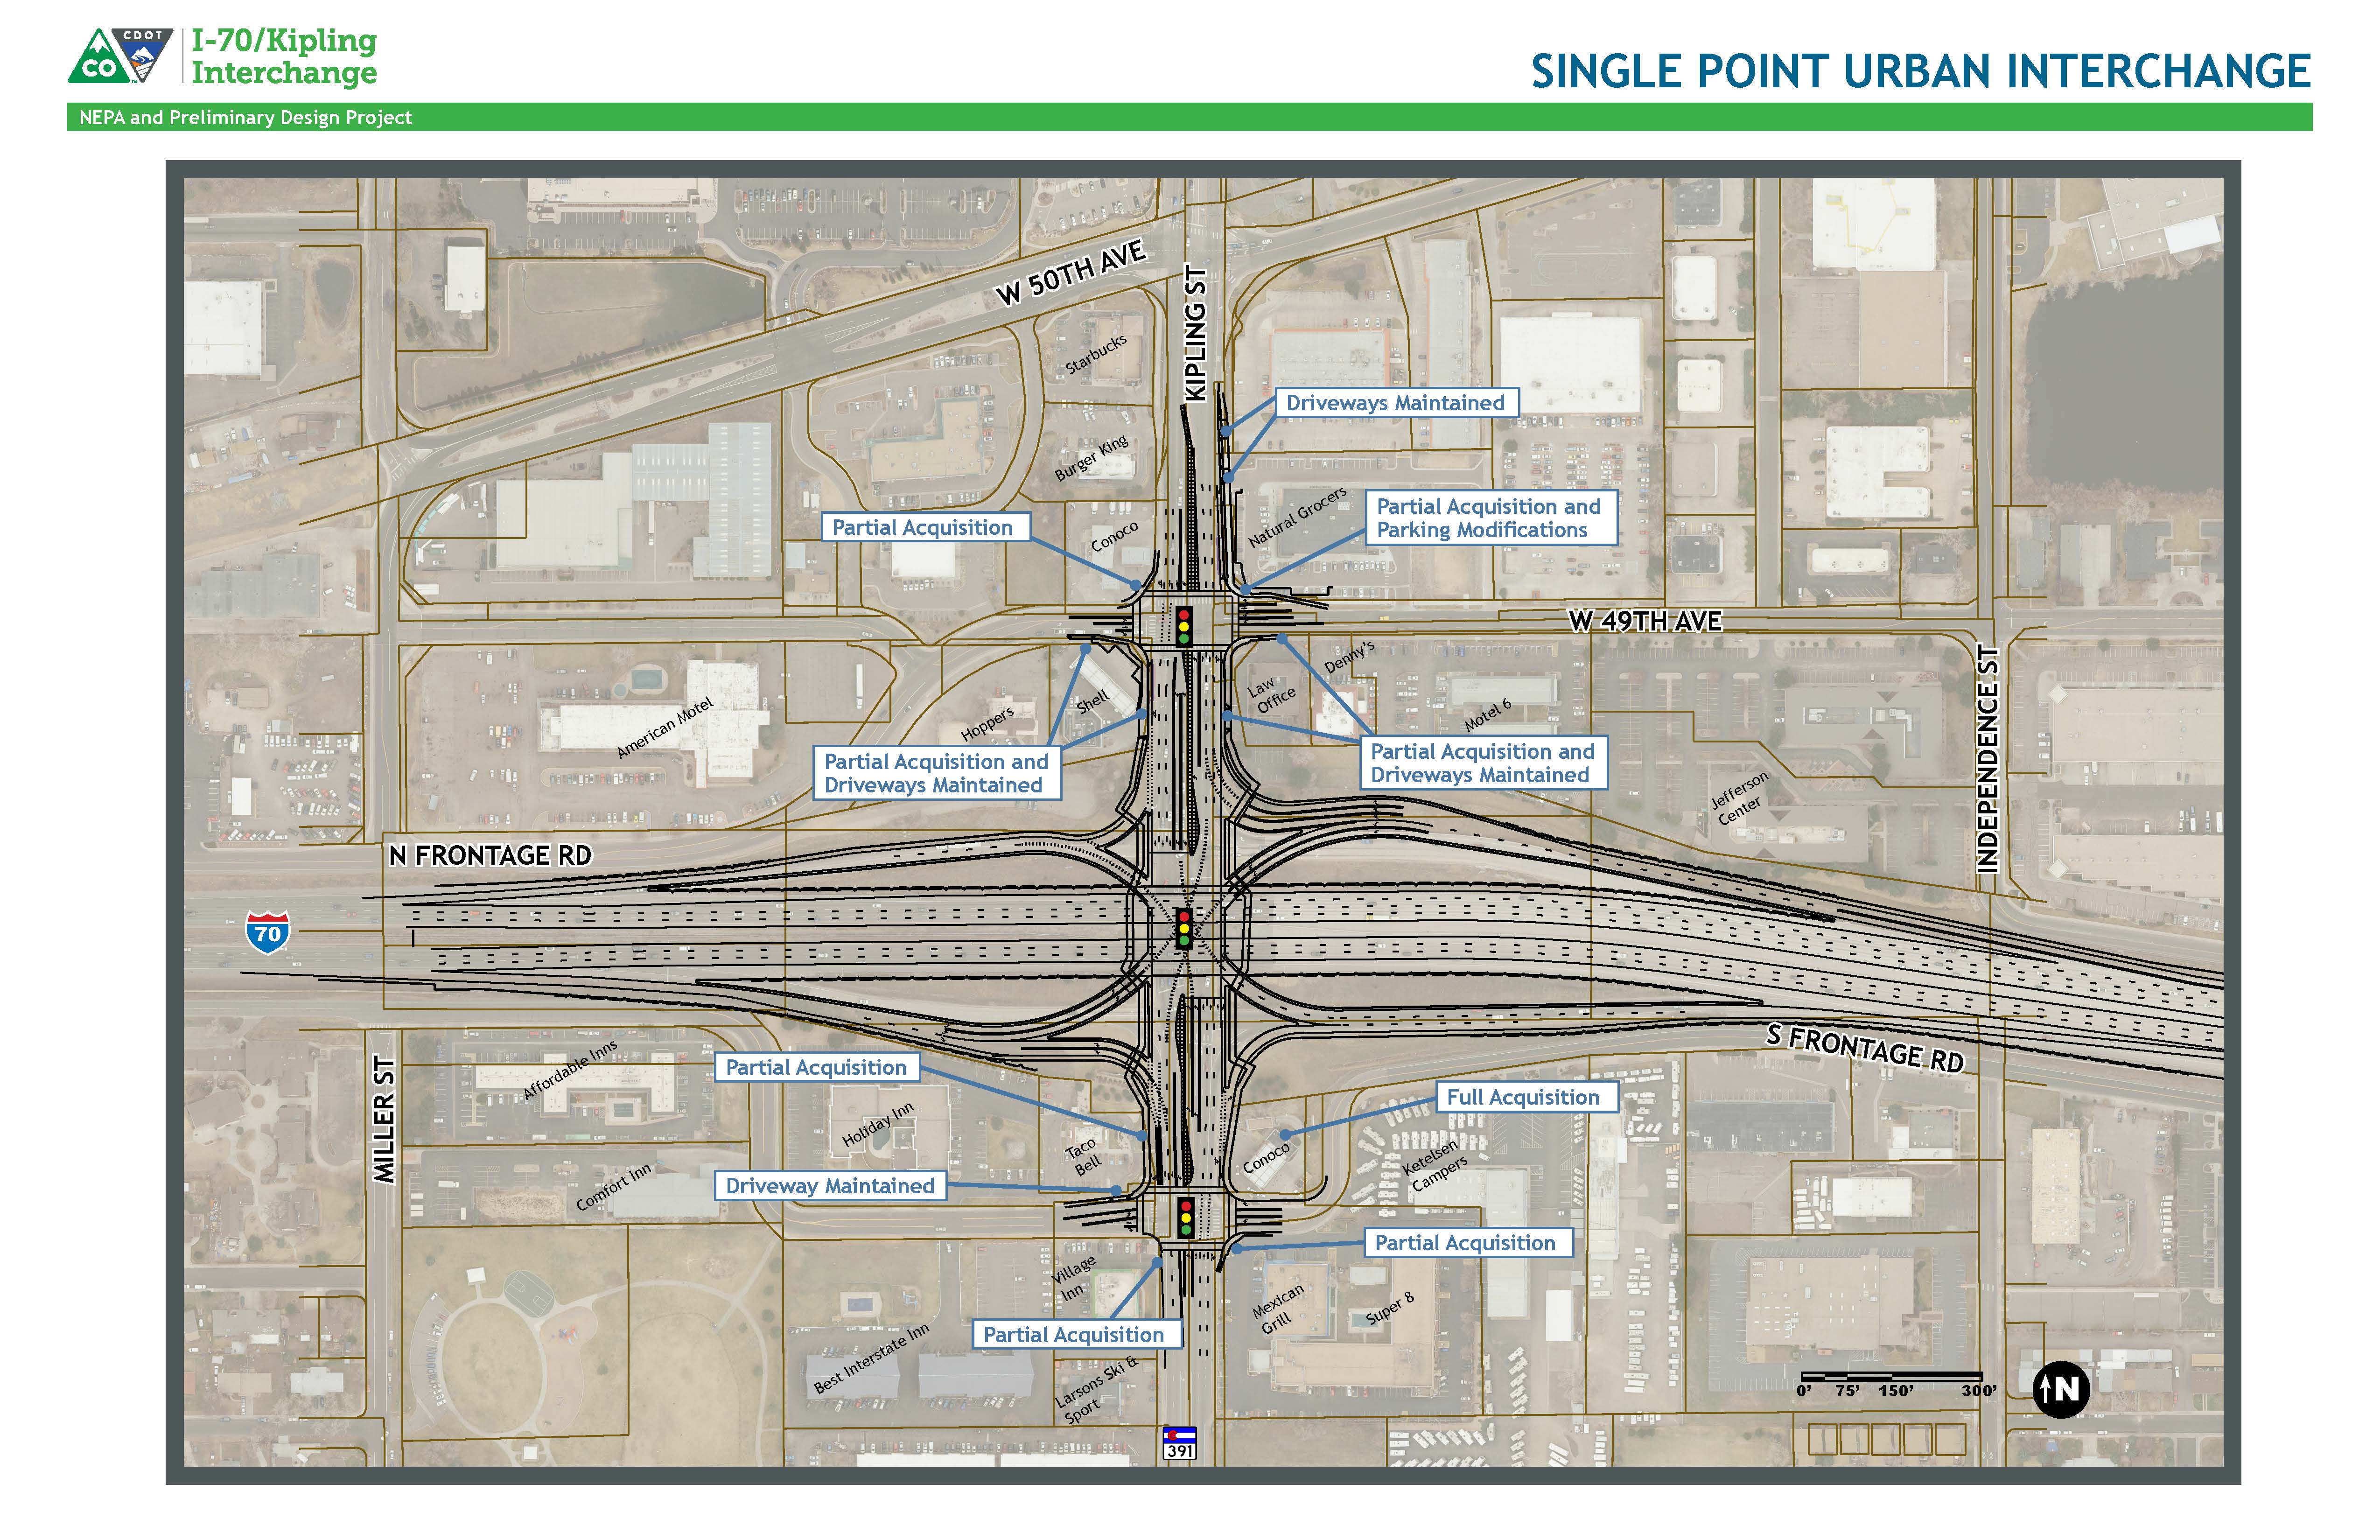 Single Point Urban Interchange detail image